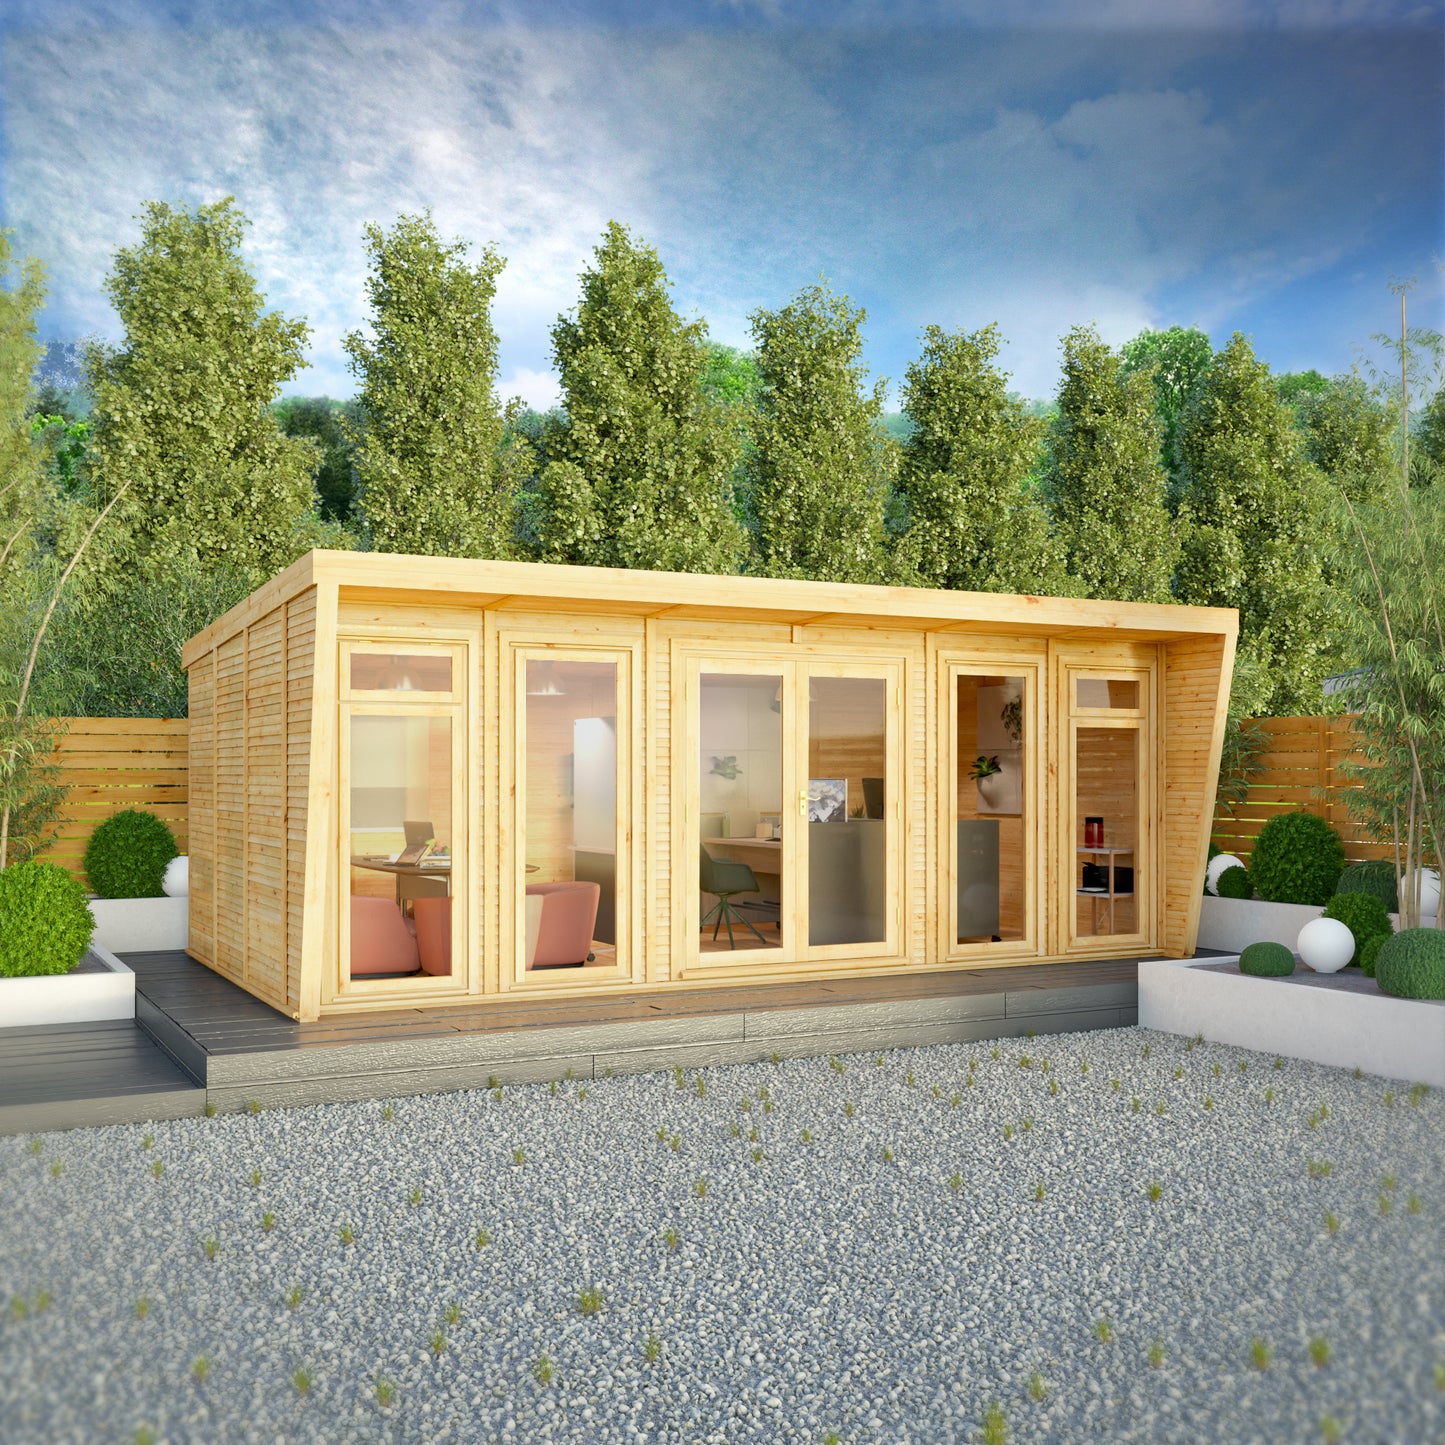 The Harlow 6m x 3m Premium Insulated Garden Room